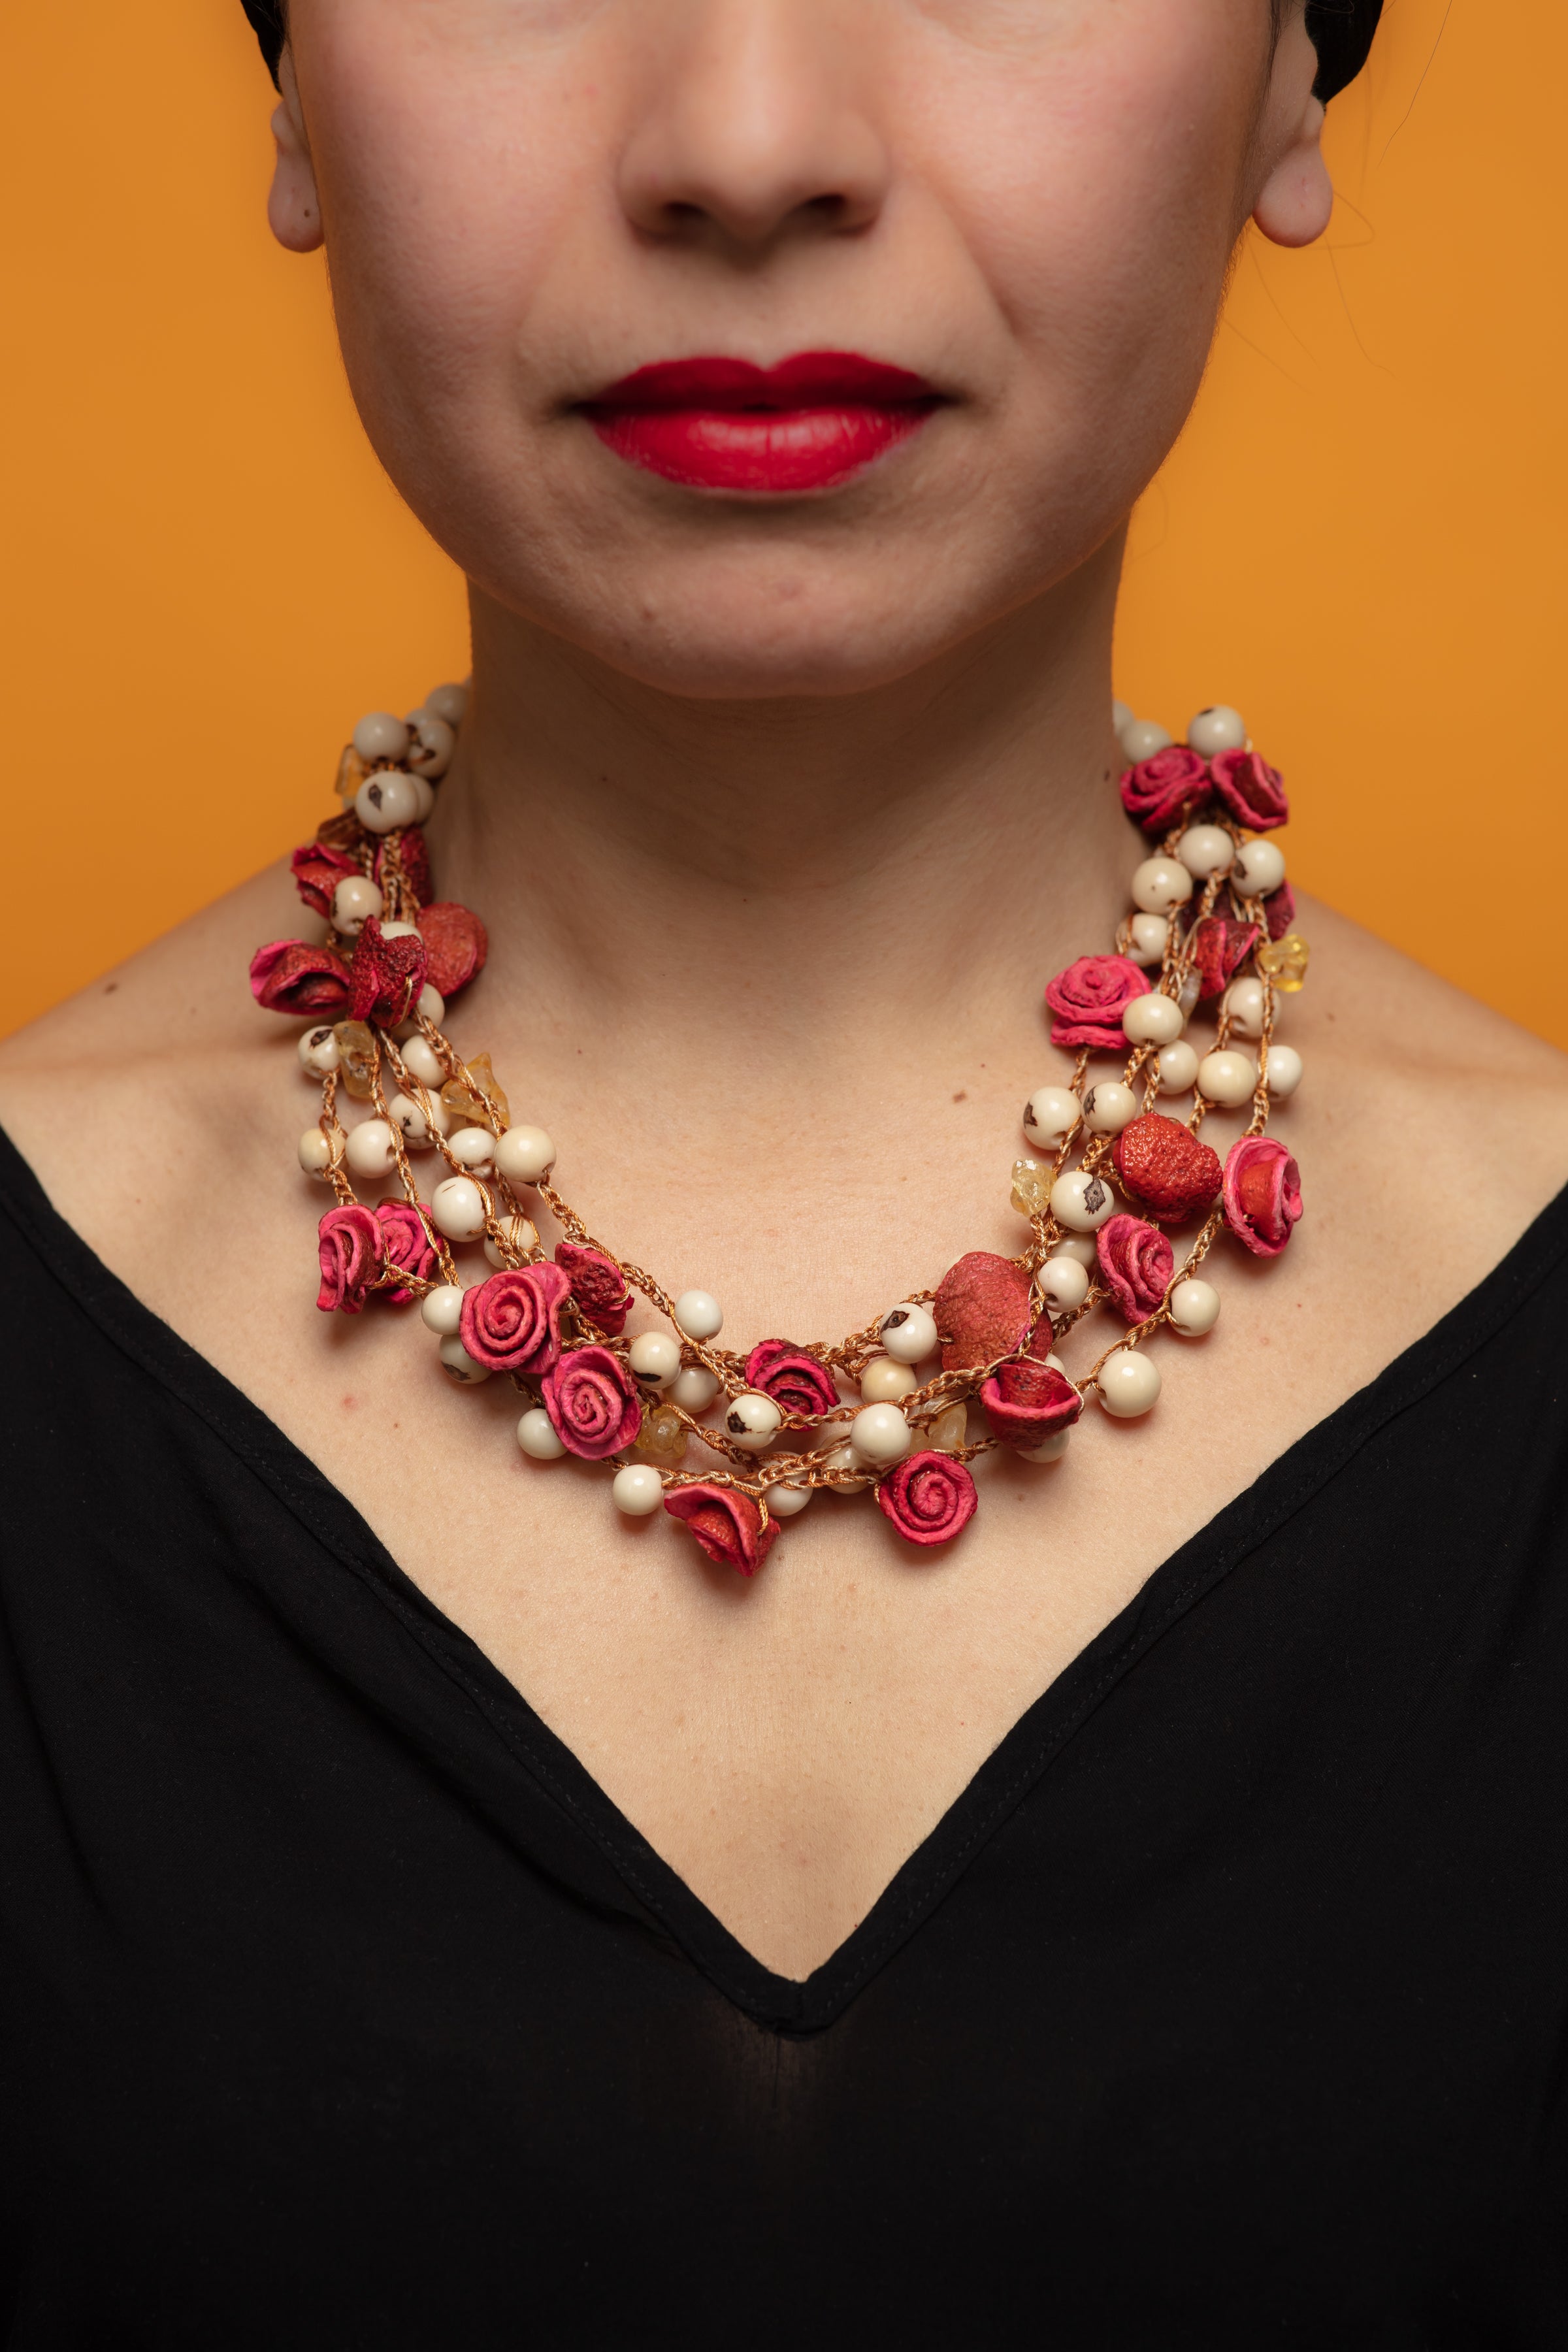 Pink/white orange peel necklace, pink roses necklace